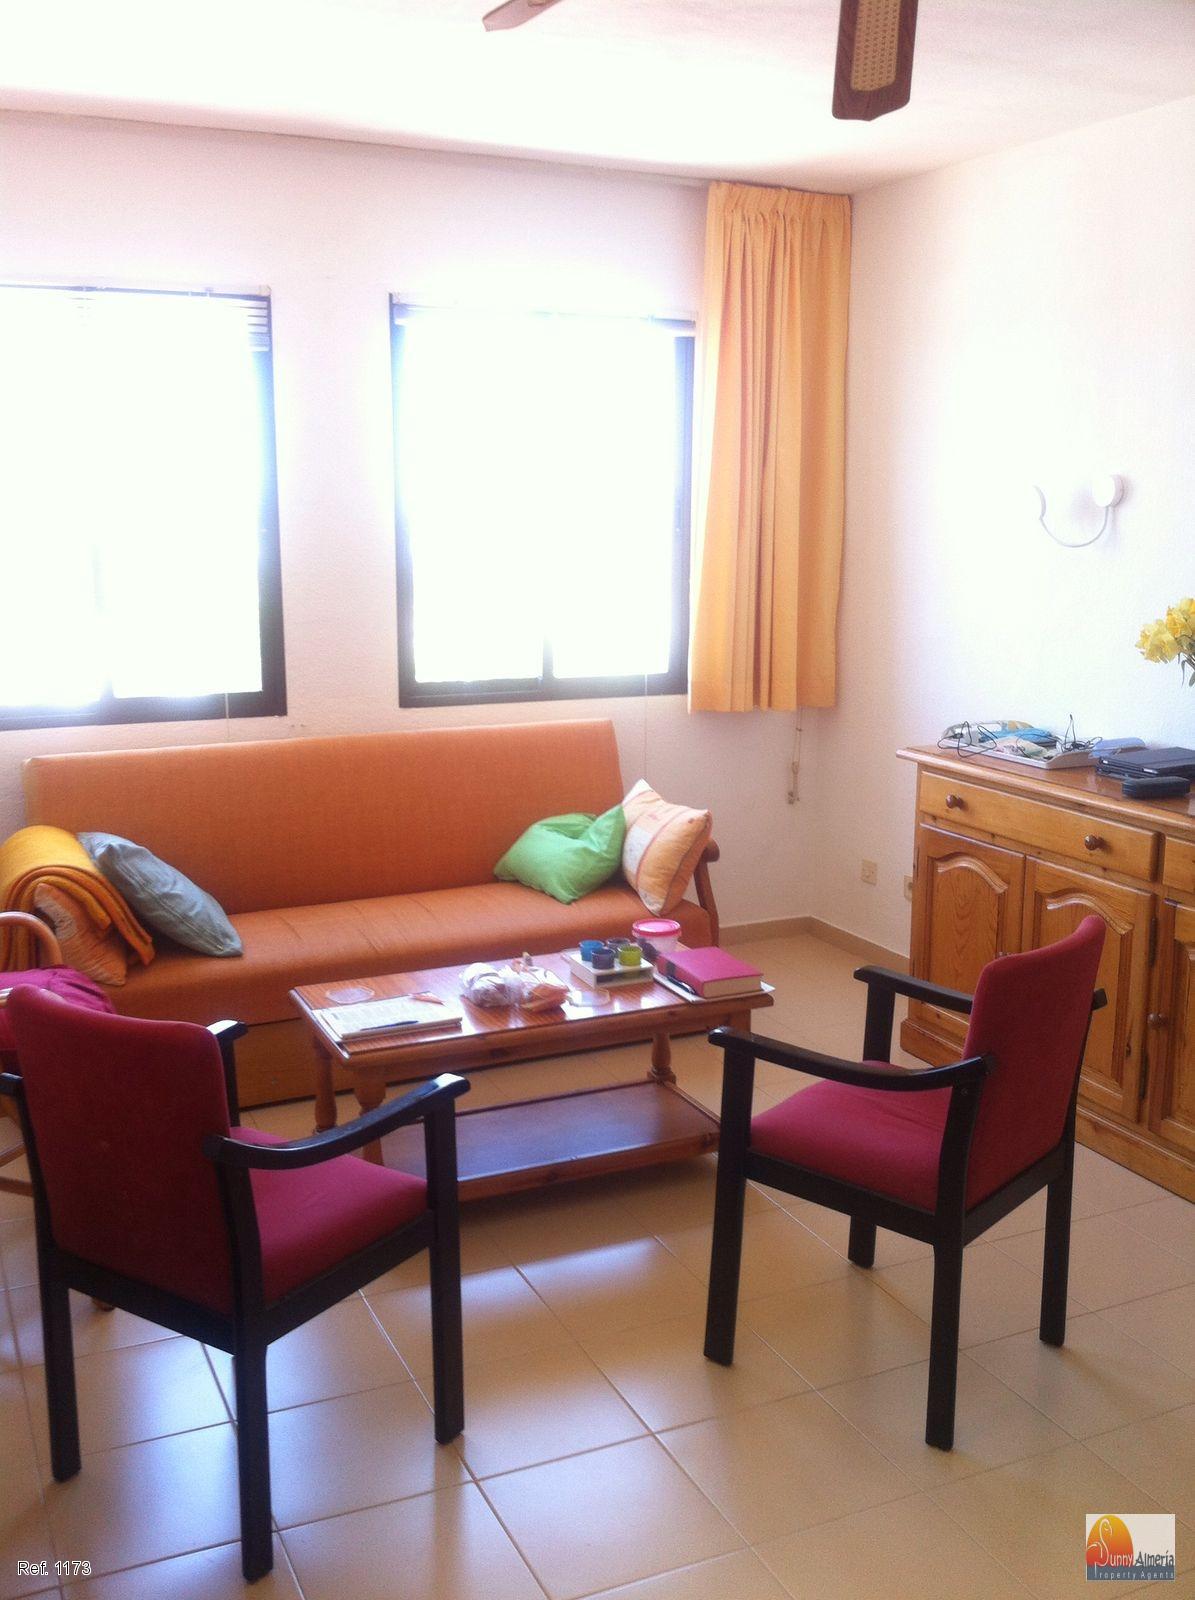 Apartment for rent in calle alameda 69 (Roquetas de Mar), 550 €/month (Season)